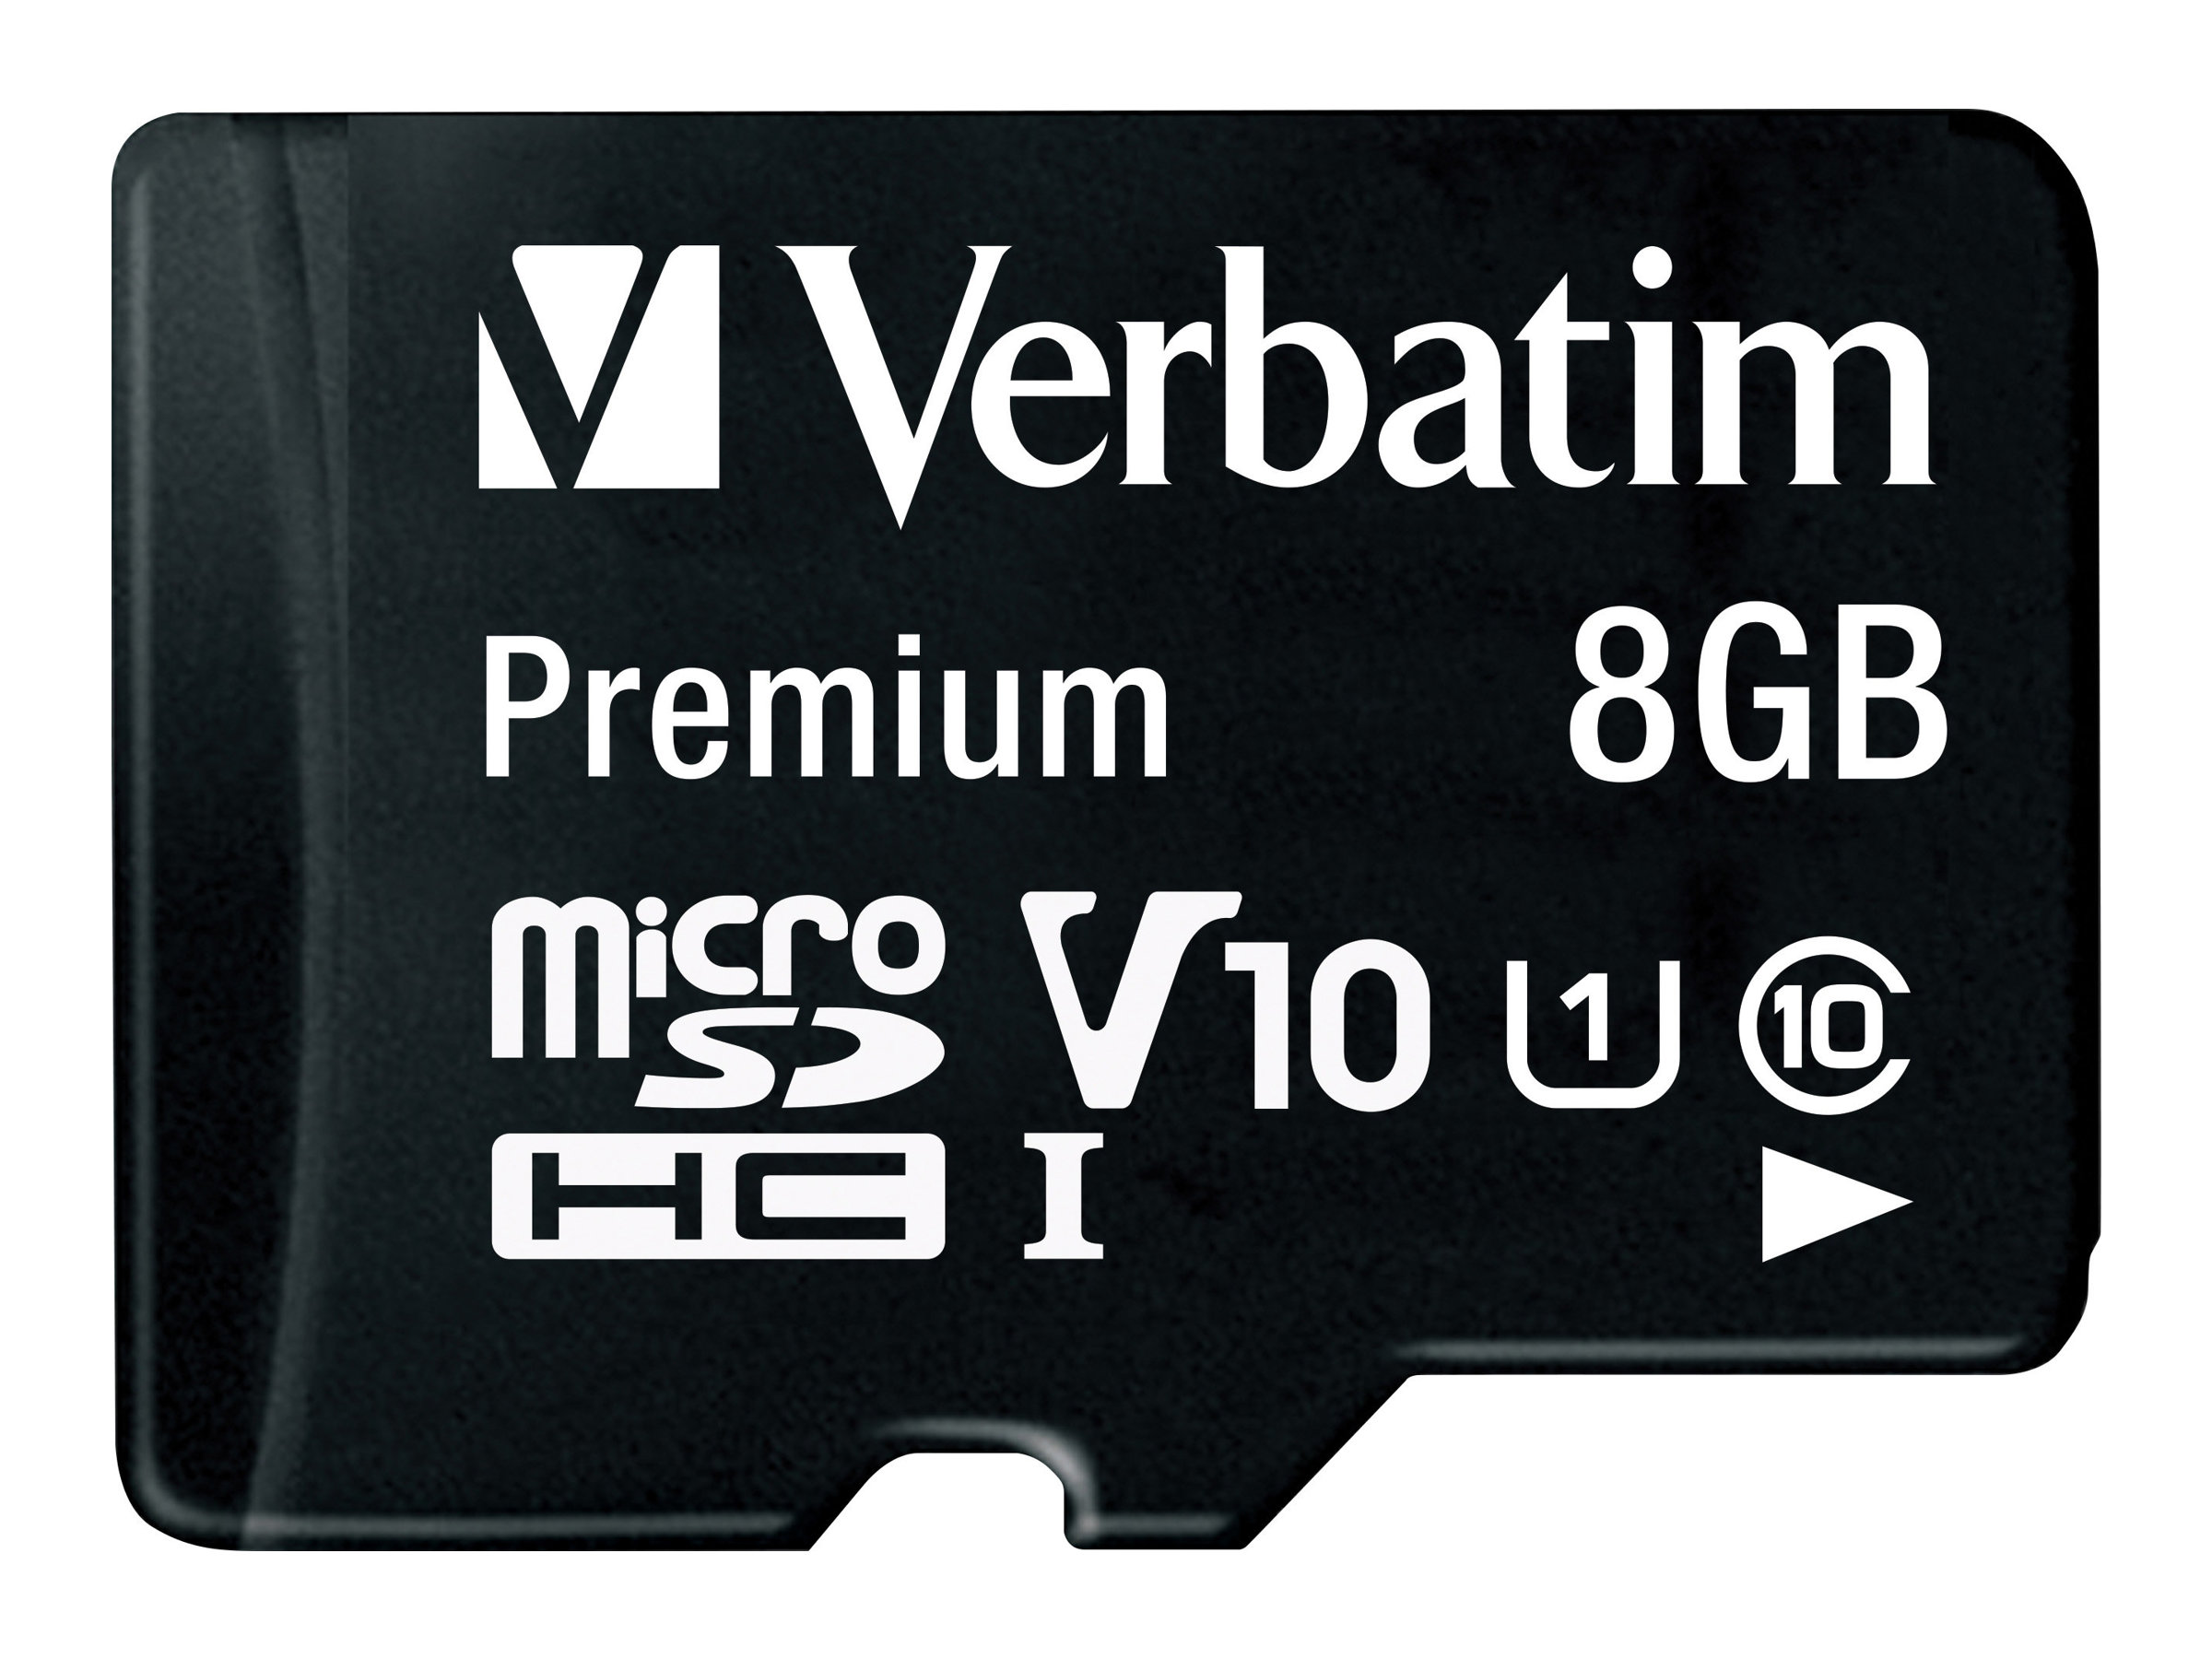 Verbatim - Flash memory card (microSDHC to SD adapter included)